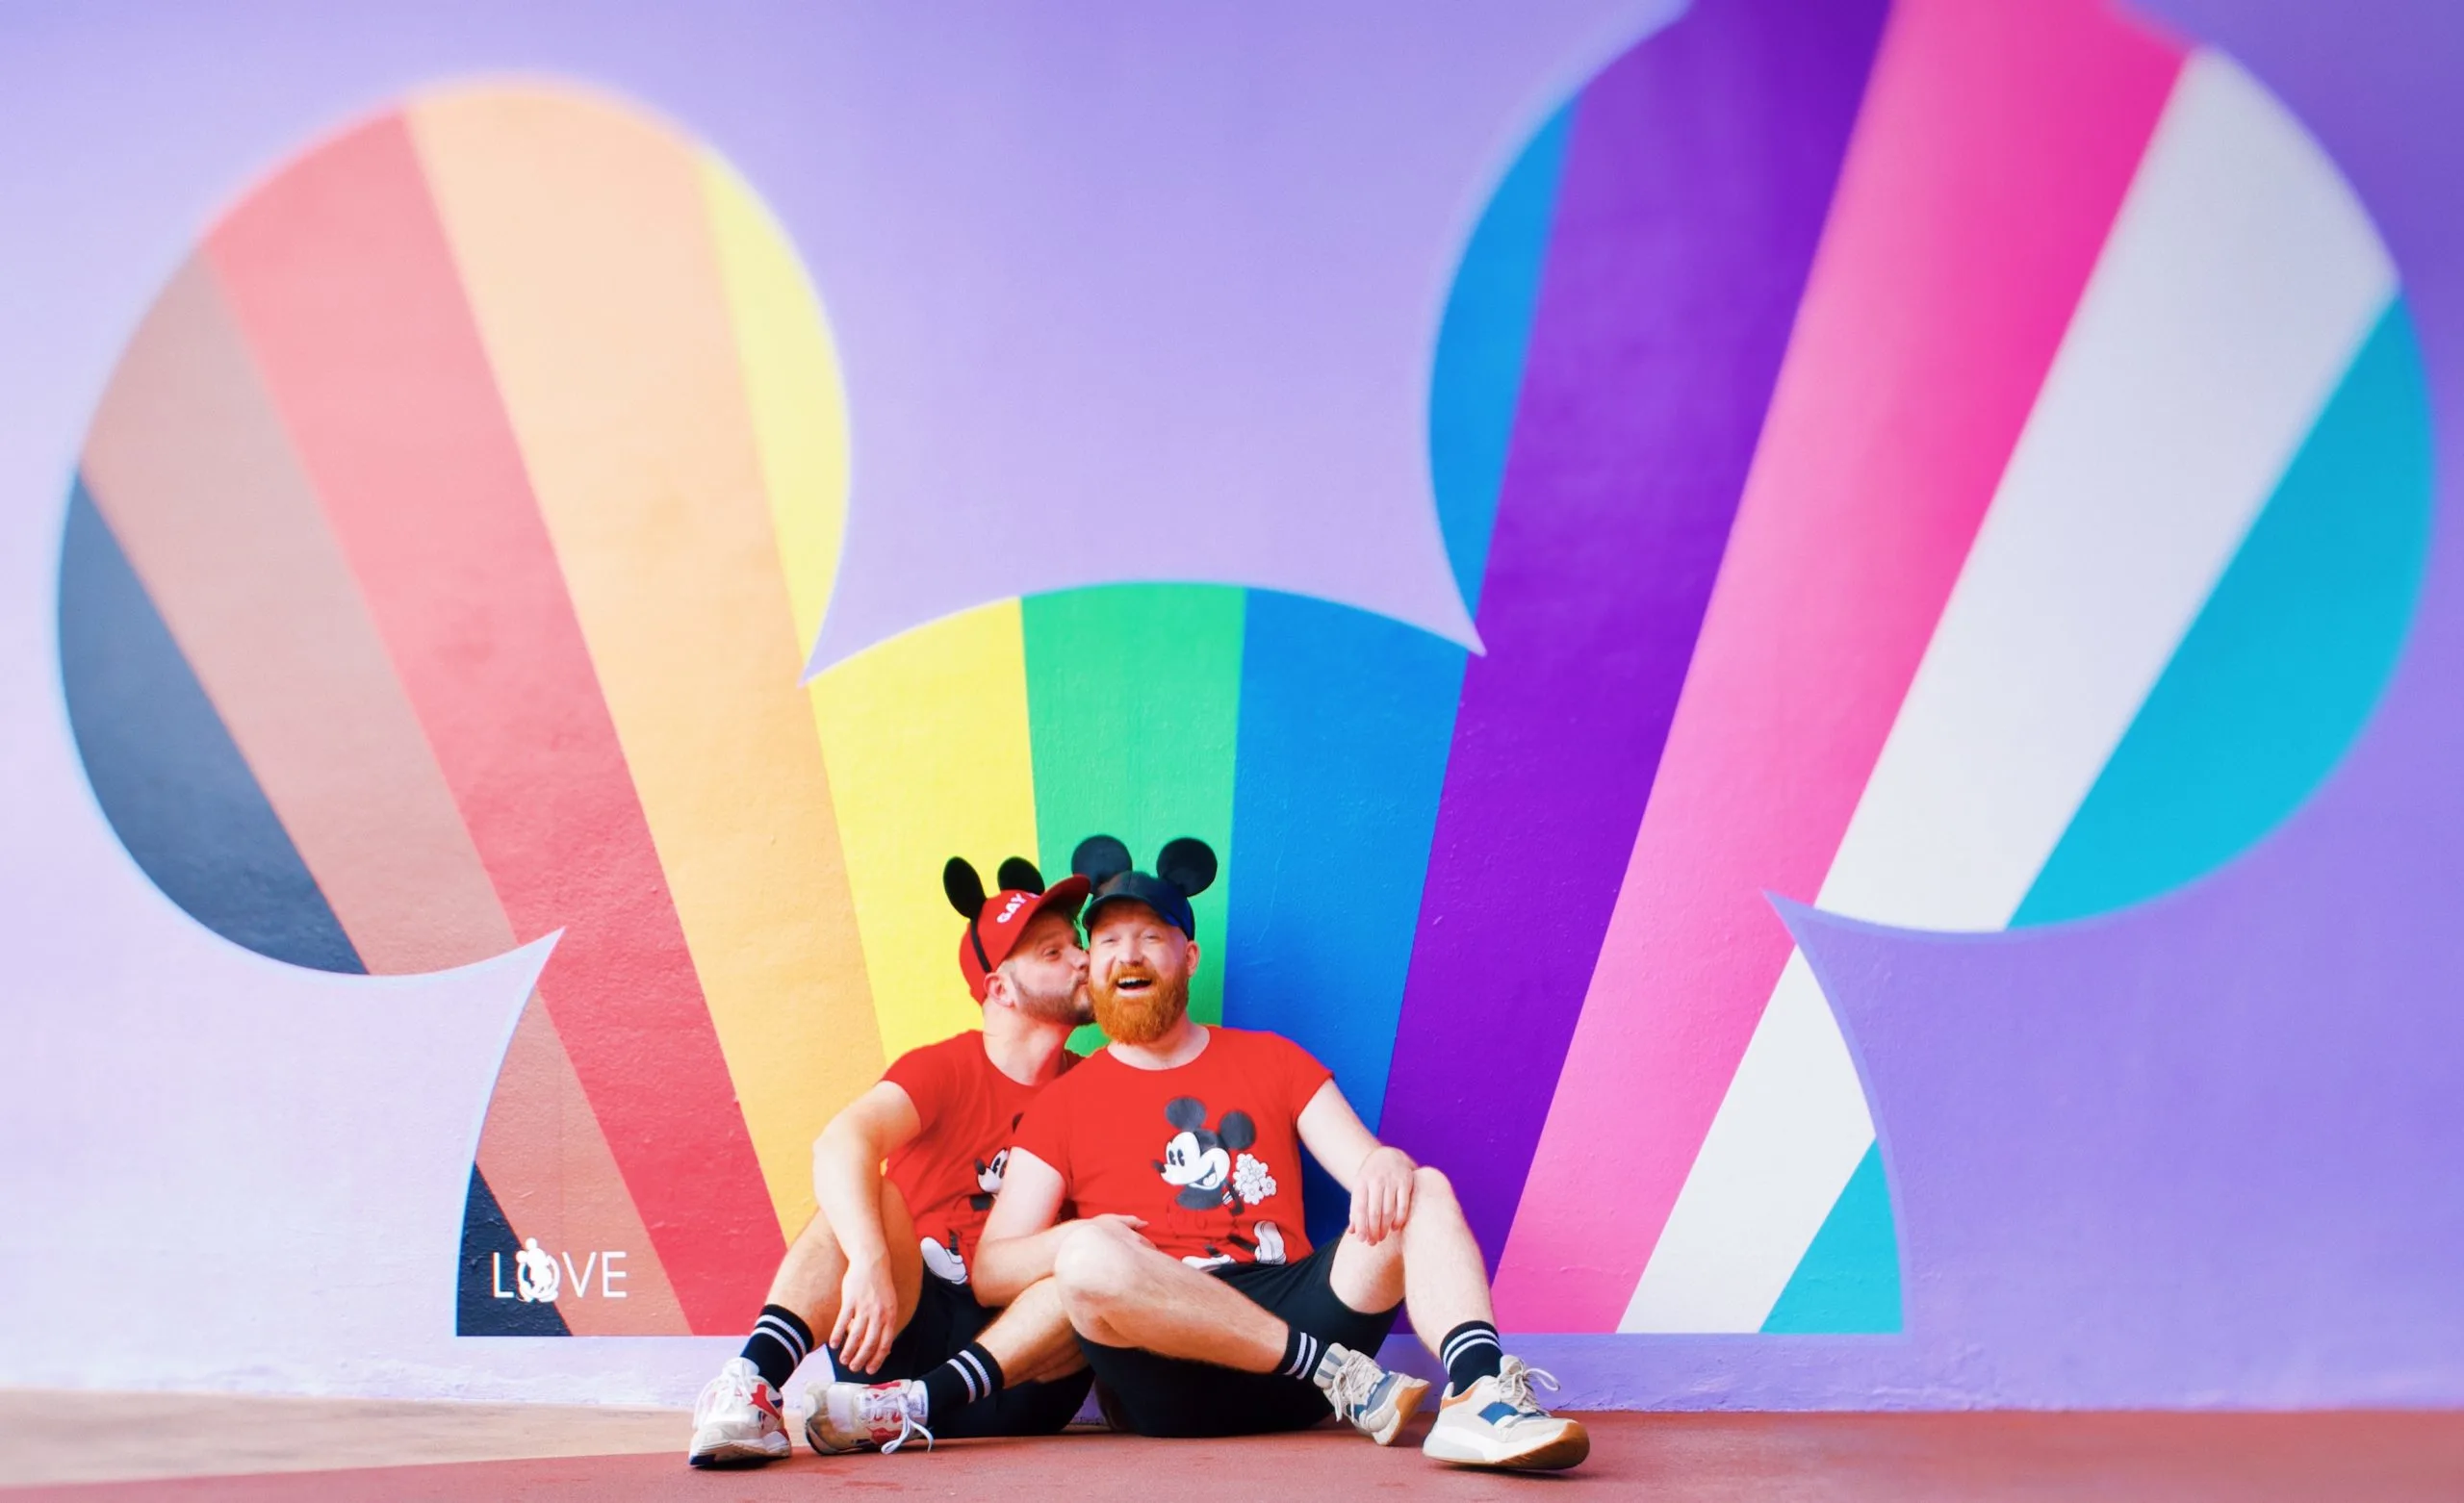 Behind scenes at disney theme parks gay sex